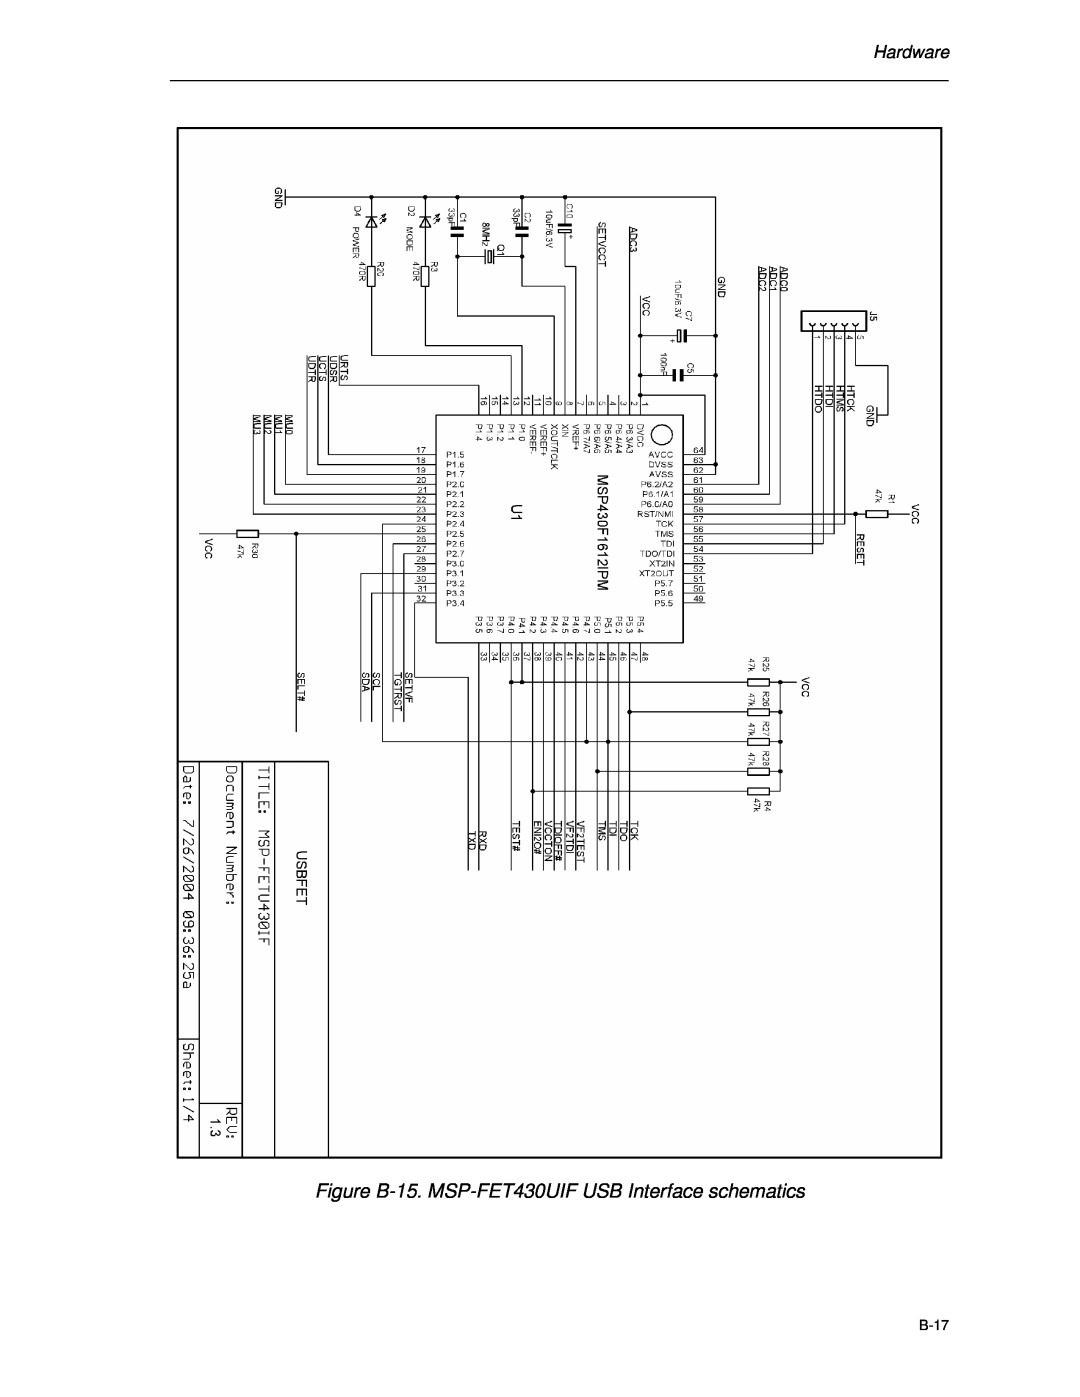 Texas Instruments manual Figure B-15. MSP-FET430UIF USB Interface schematics, Hardware, B-17 